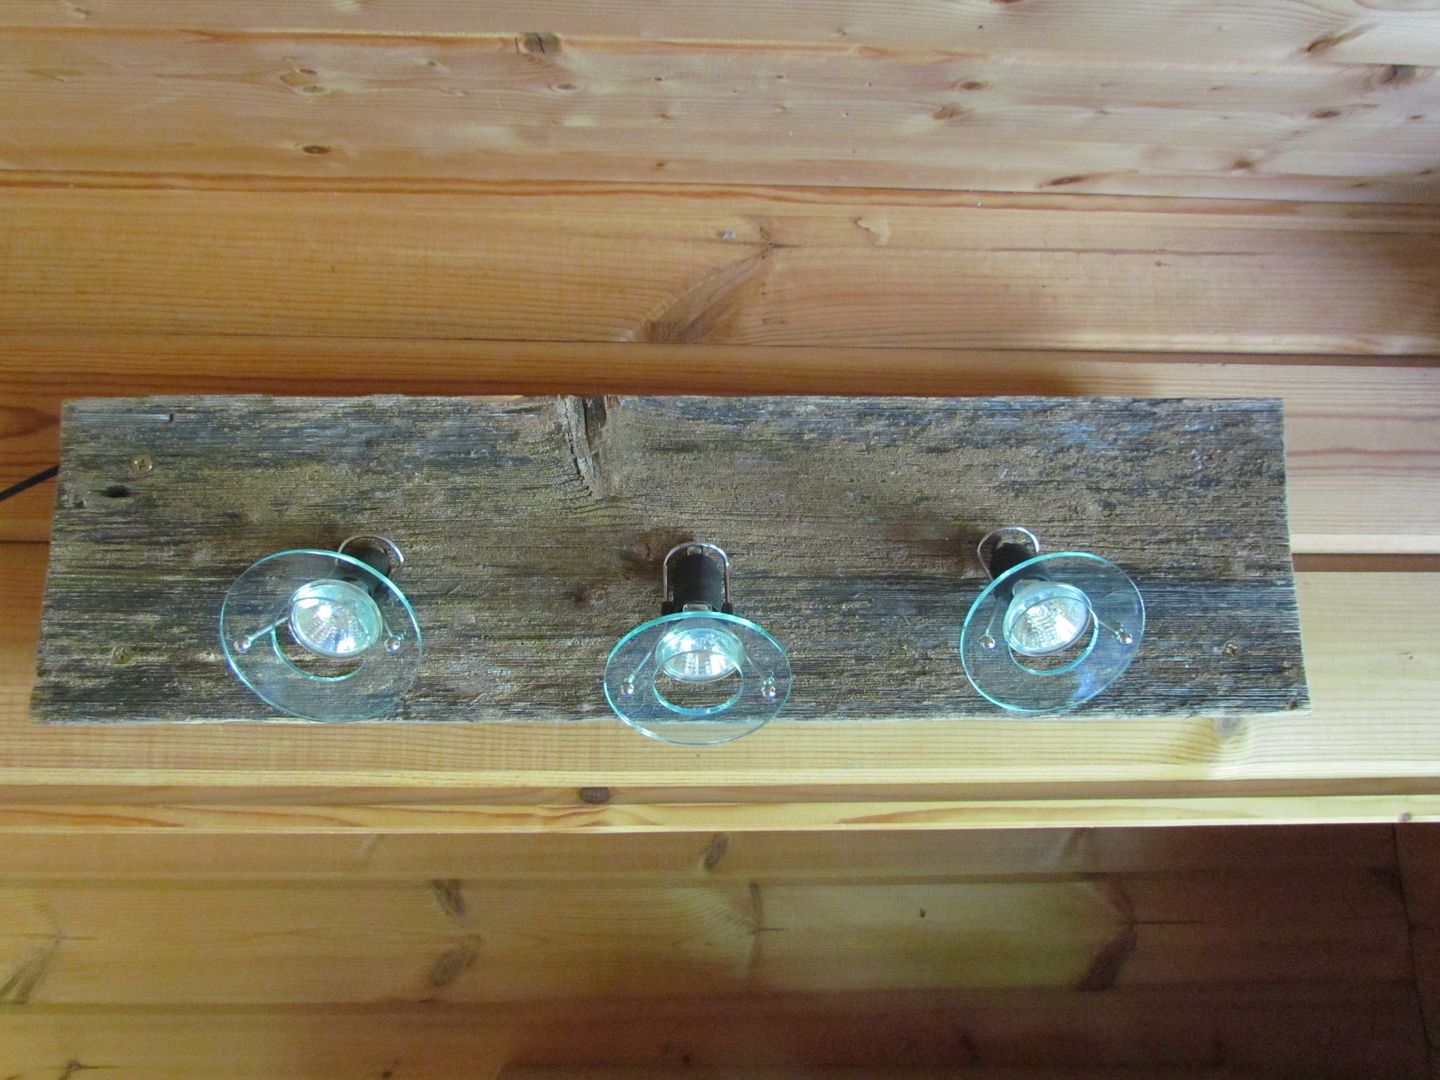 Halogenspots auf einem Kelo-Brett homify Rustikale Wohnzimmer Holz Holznachbildung Licht,Beleuchtung,Lampe,Wandlampe,nordisch,skandinavisch,Finnland,Lappland,Holzlampe,Holz,Holzarbeit,Beleuchtung